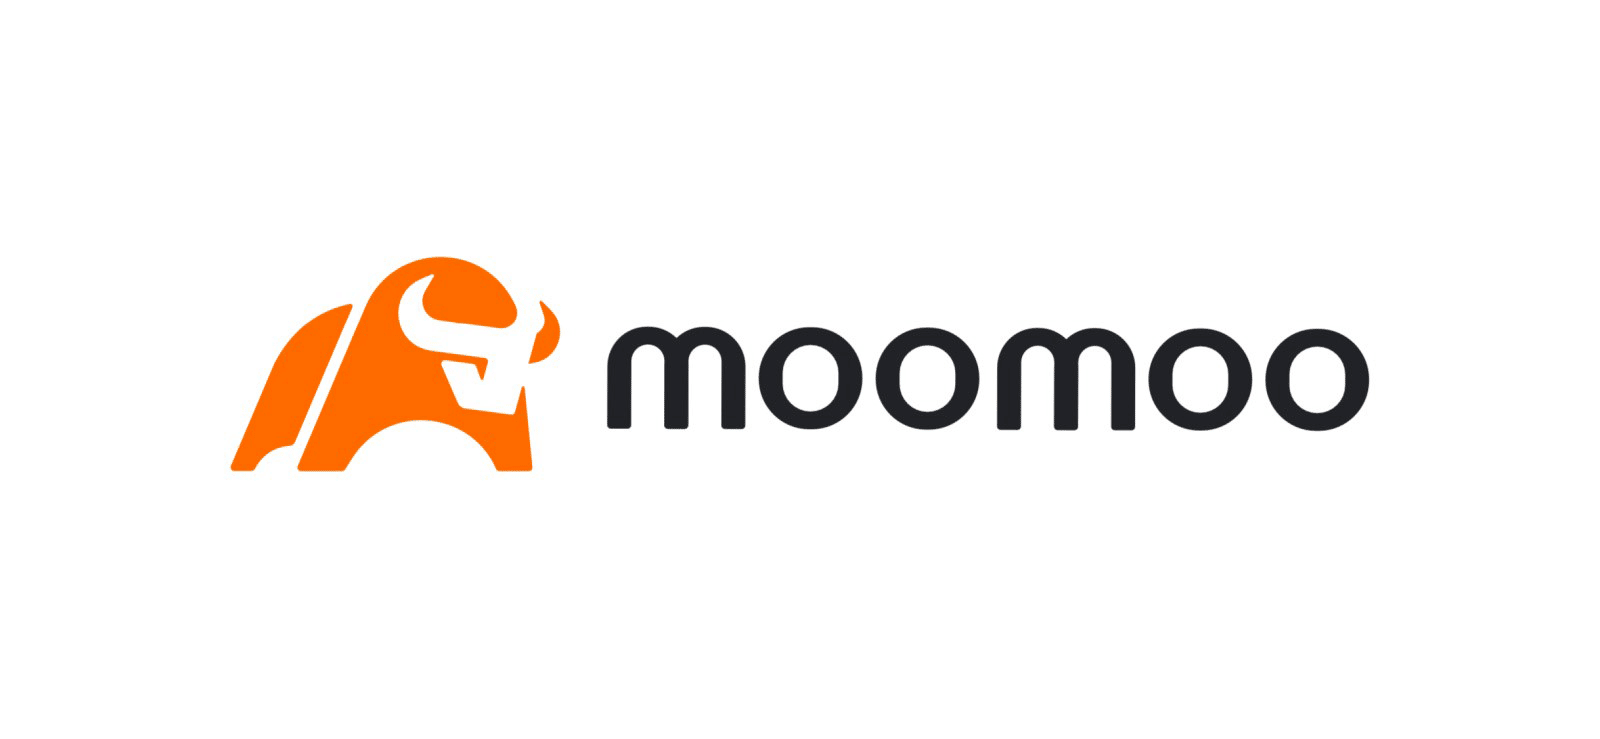 moomooo review